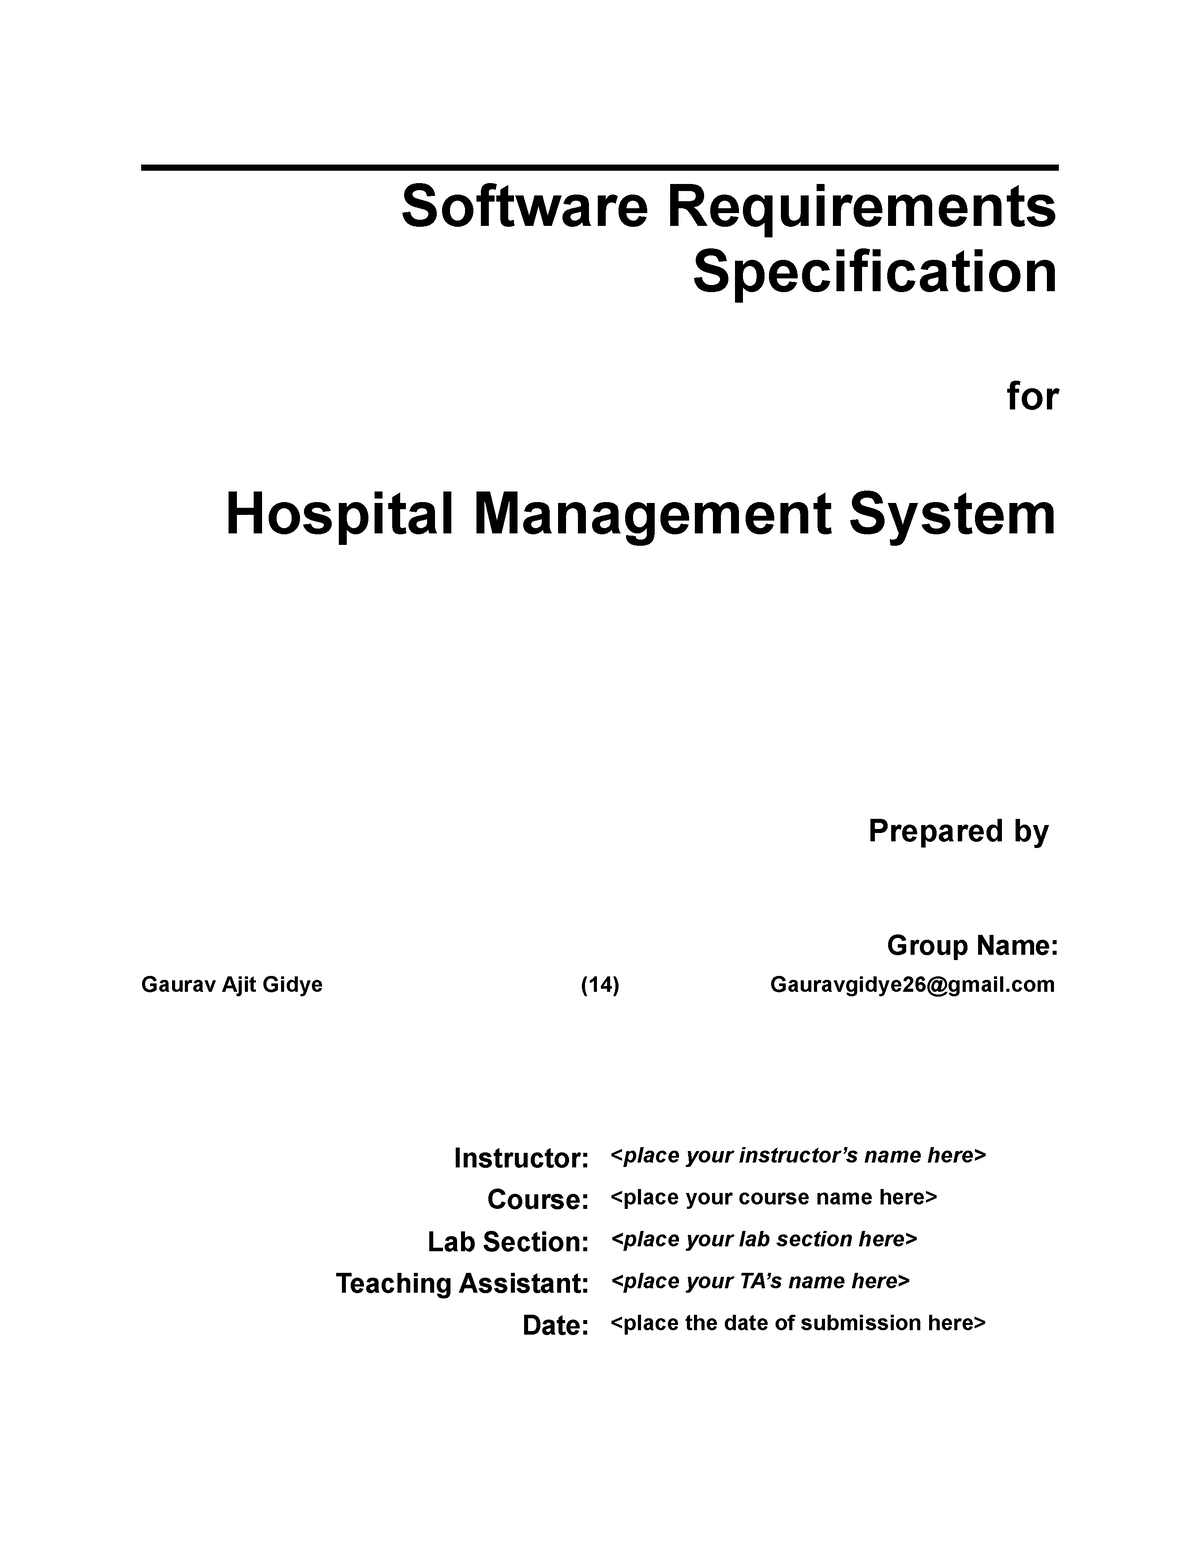 hospital management system copy assignment